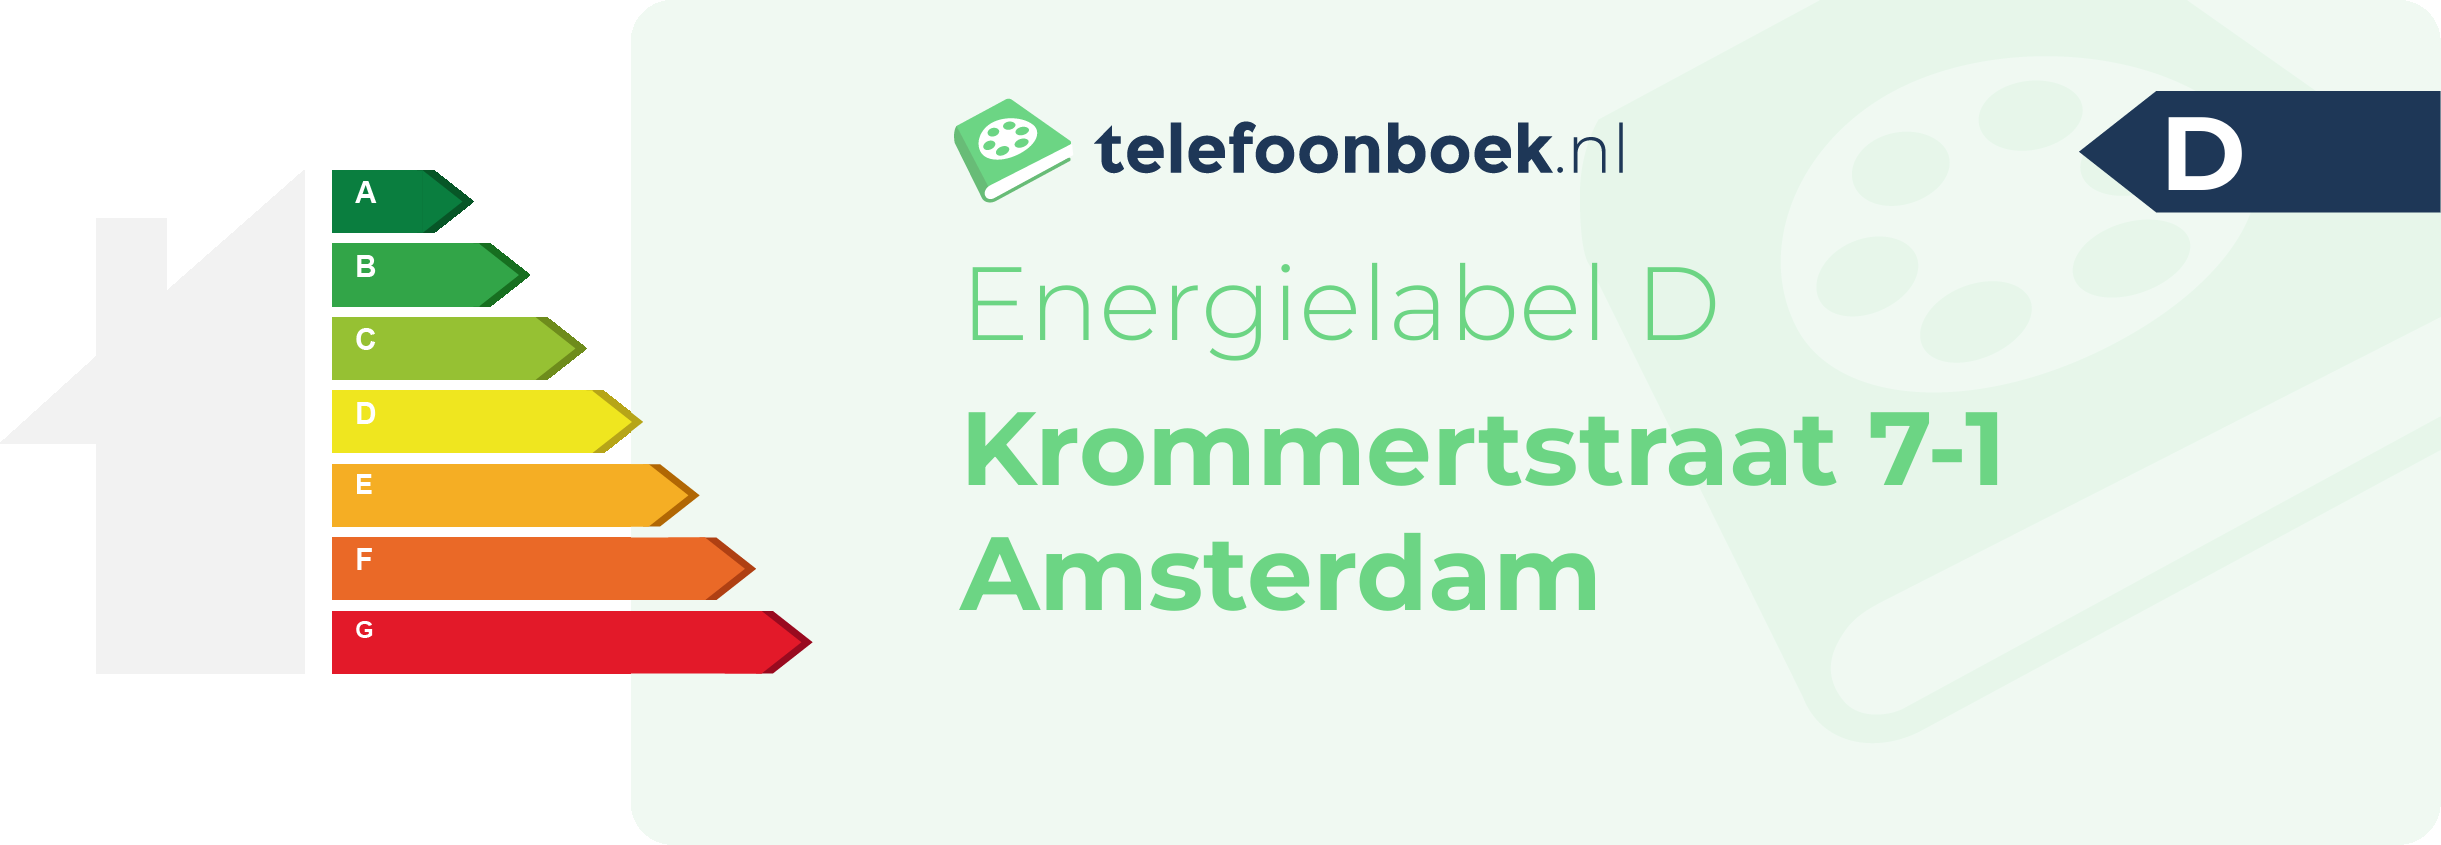 Energielabel Krommertstraat 7-1 Amsterdam